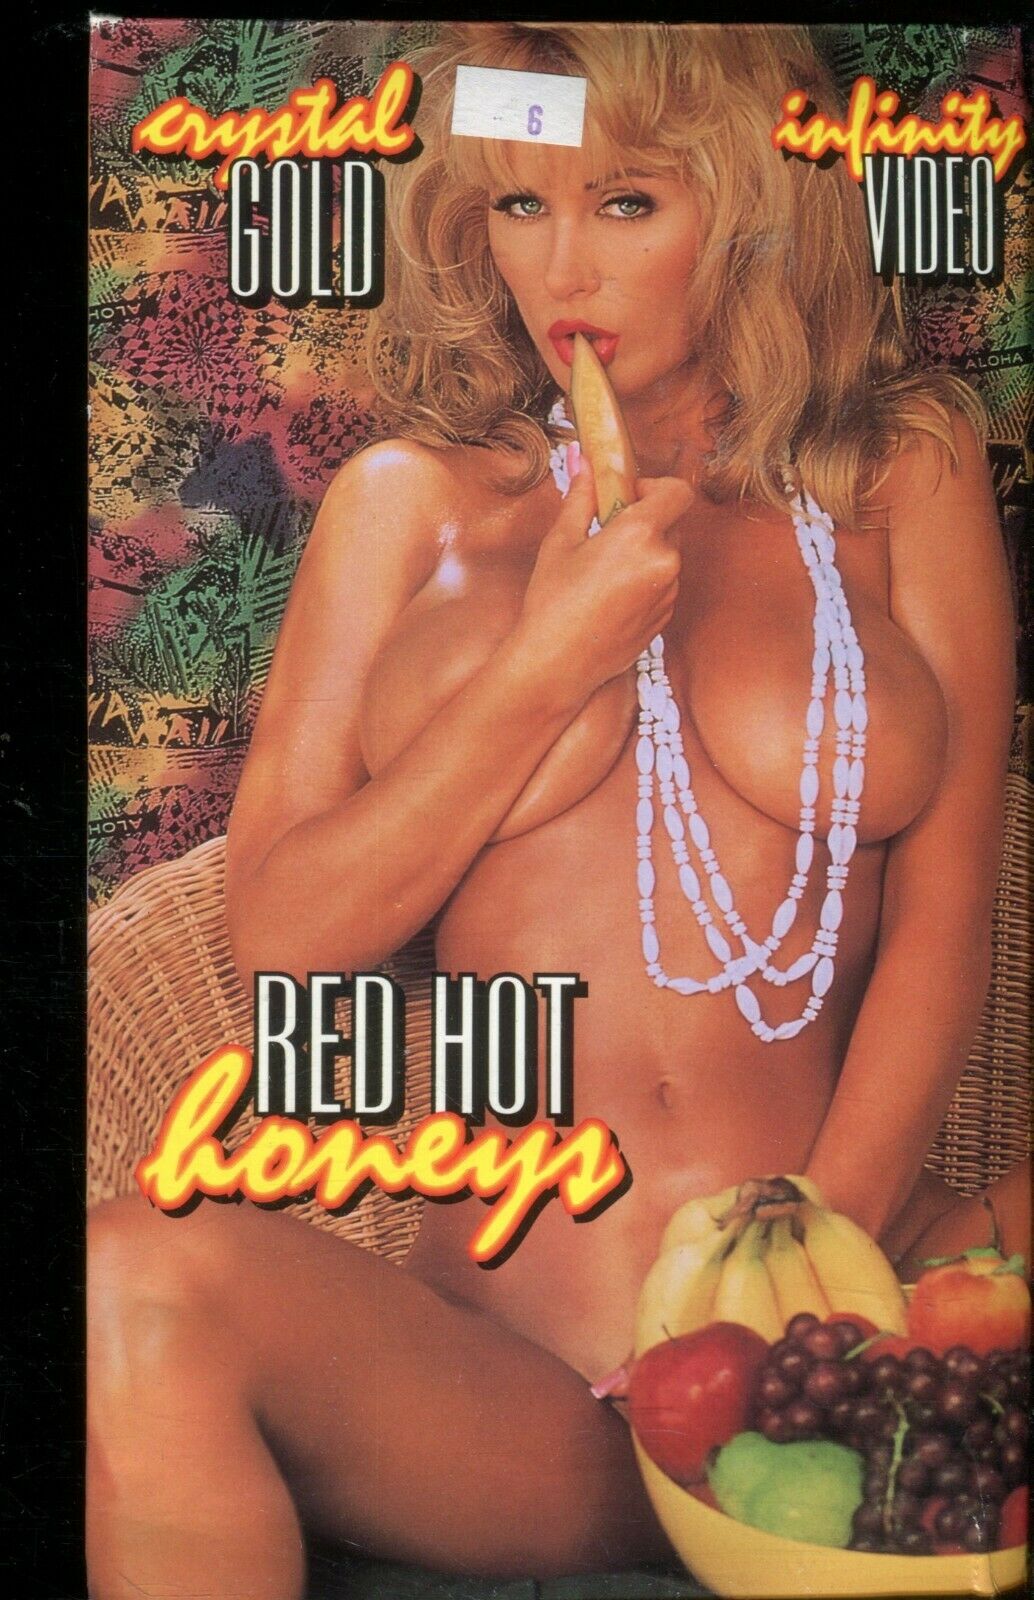 Red Hot Honeys VHS Crystal Gold XXX 021120lm-ep3 â€“ Mr-Magazine